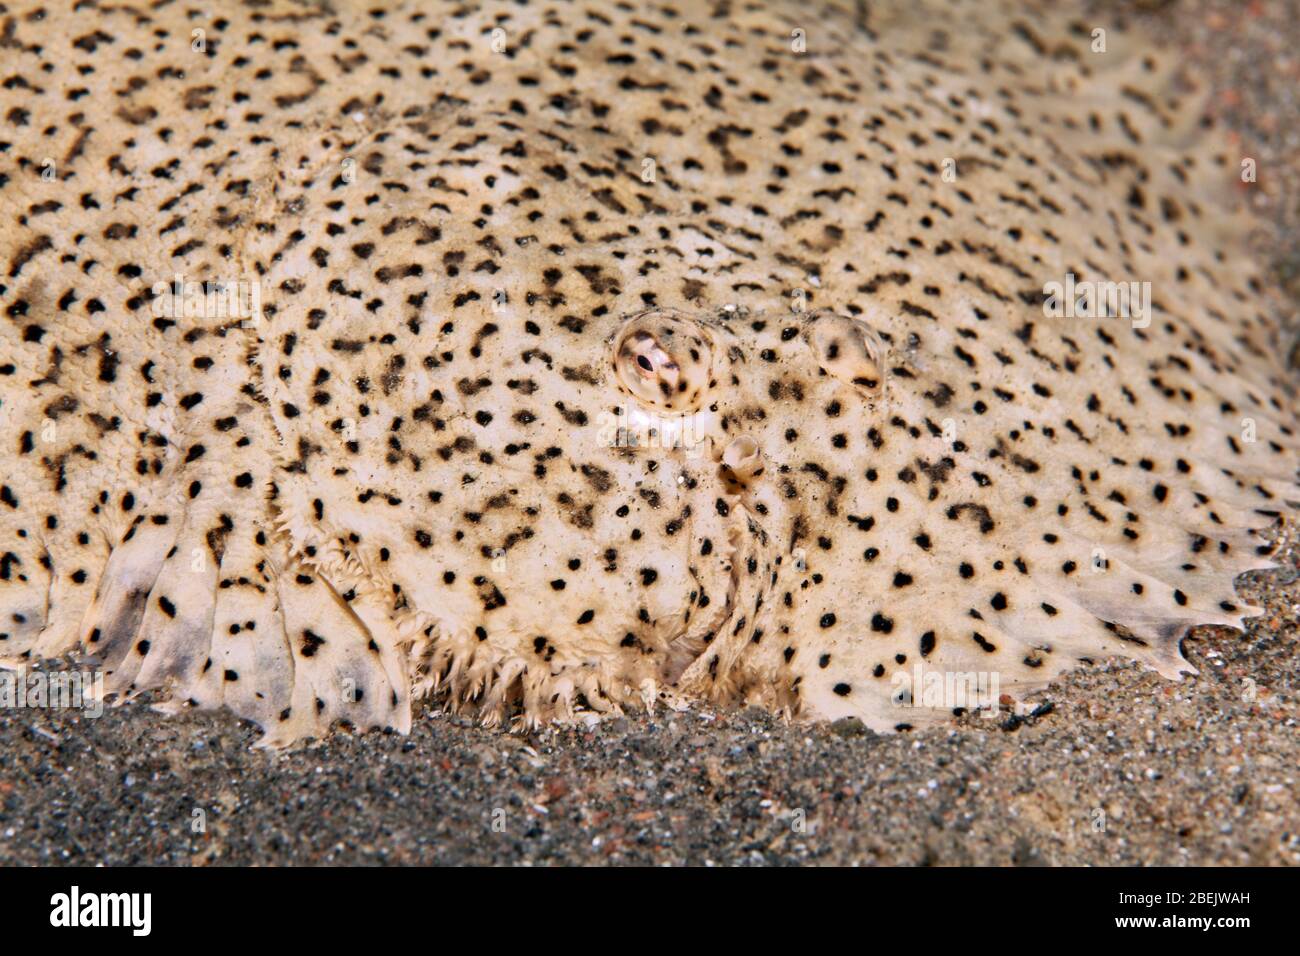 Finless sole (Pardachirus marmoratus) is located on sandy ground, Red Sea, Jordan Stock Photo